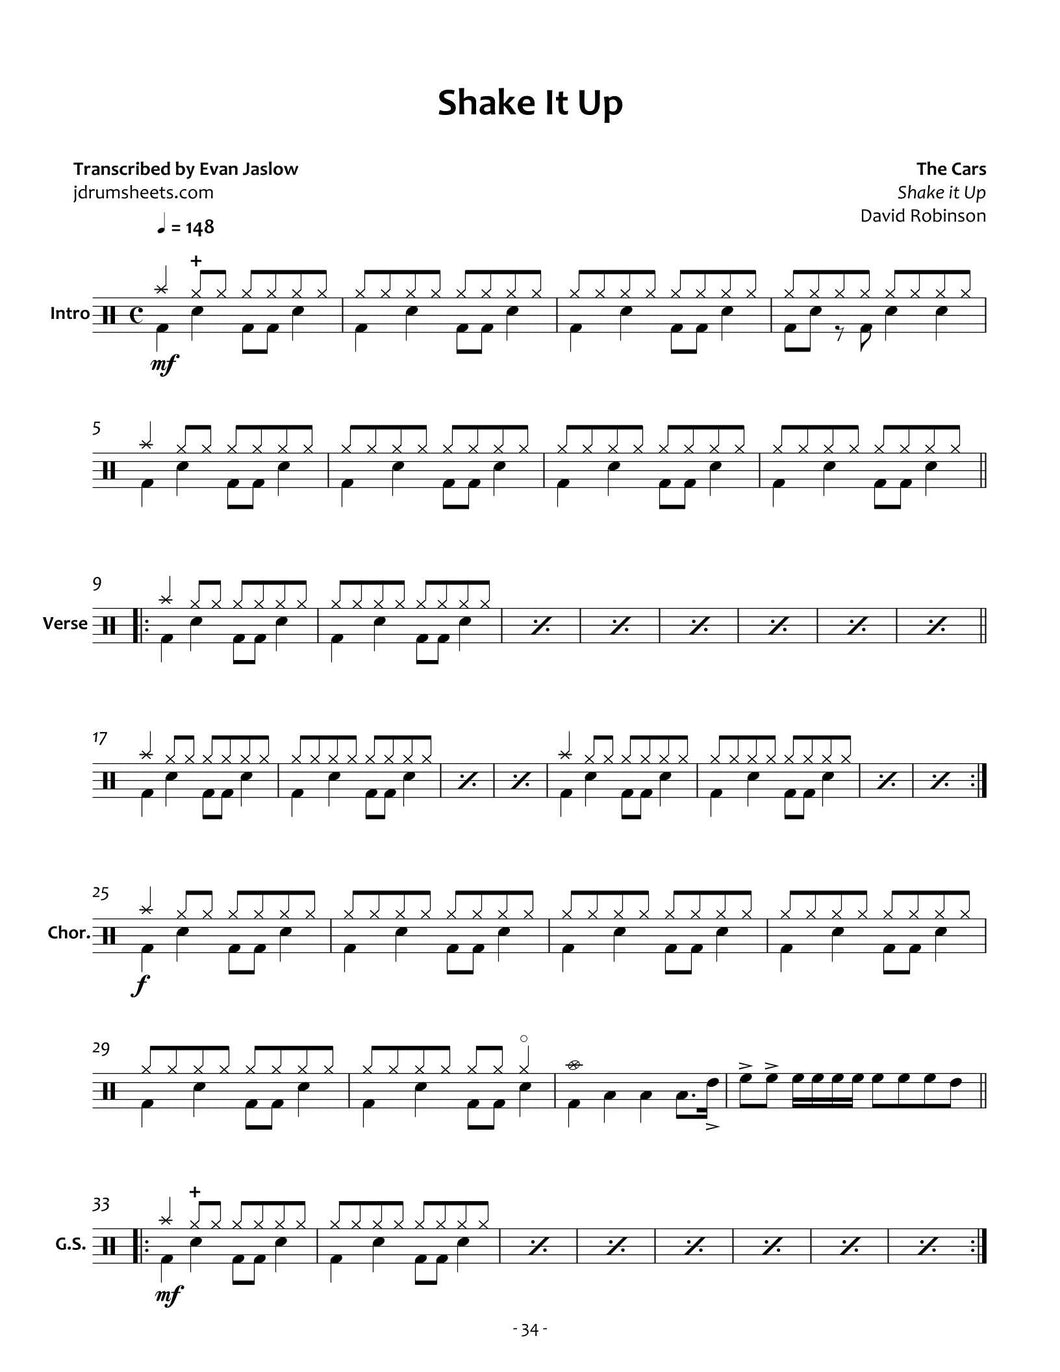 Shake It Up - The Cars - Full Drum Transcription / Drum Sheet Music - Jaslow Drum Sheets